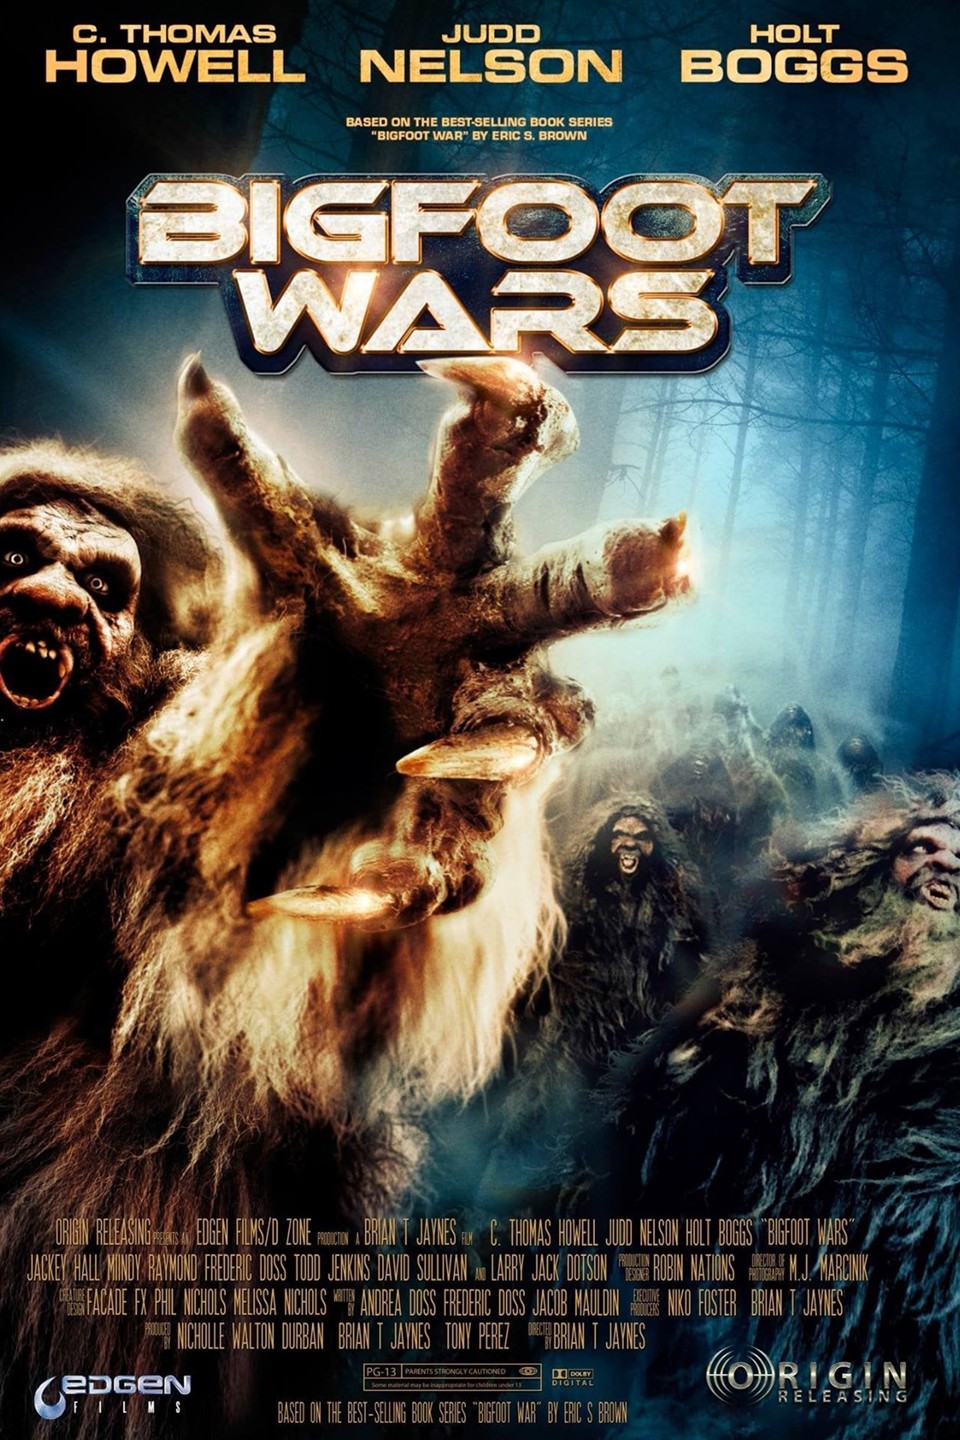  Bigfoot War: After the Fall (Audible Audio Edition